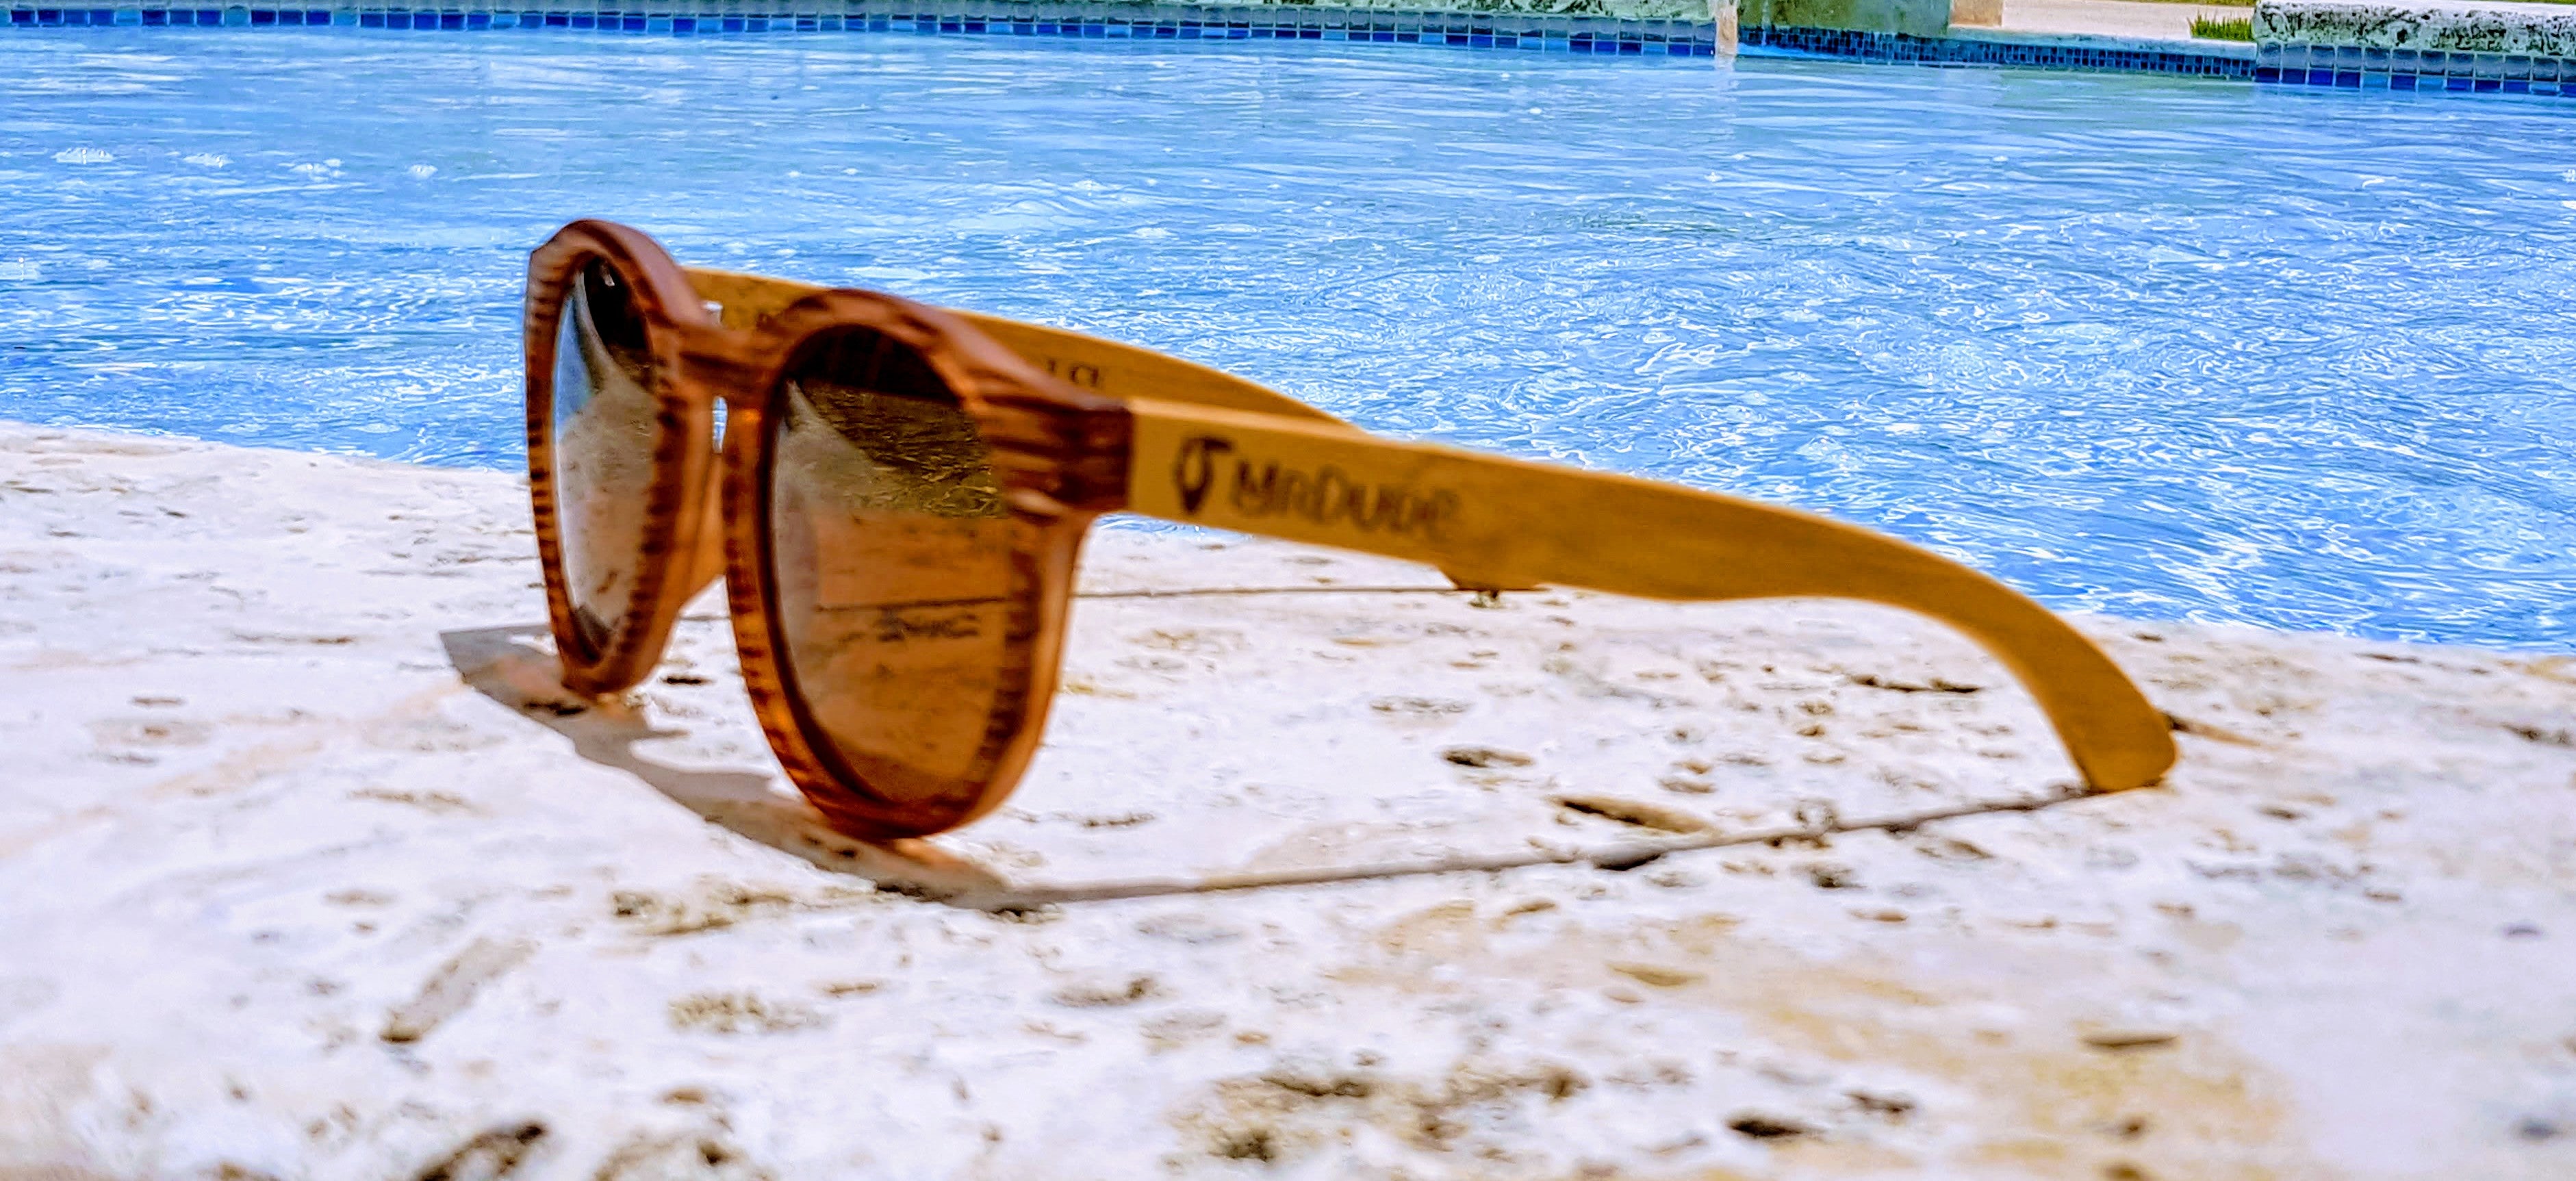 Stripe Polarized Eco-Friendly Sunglasses